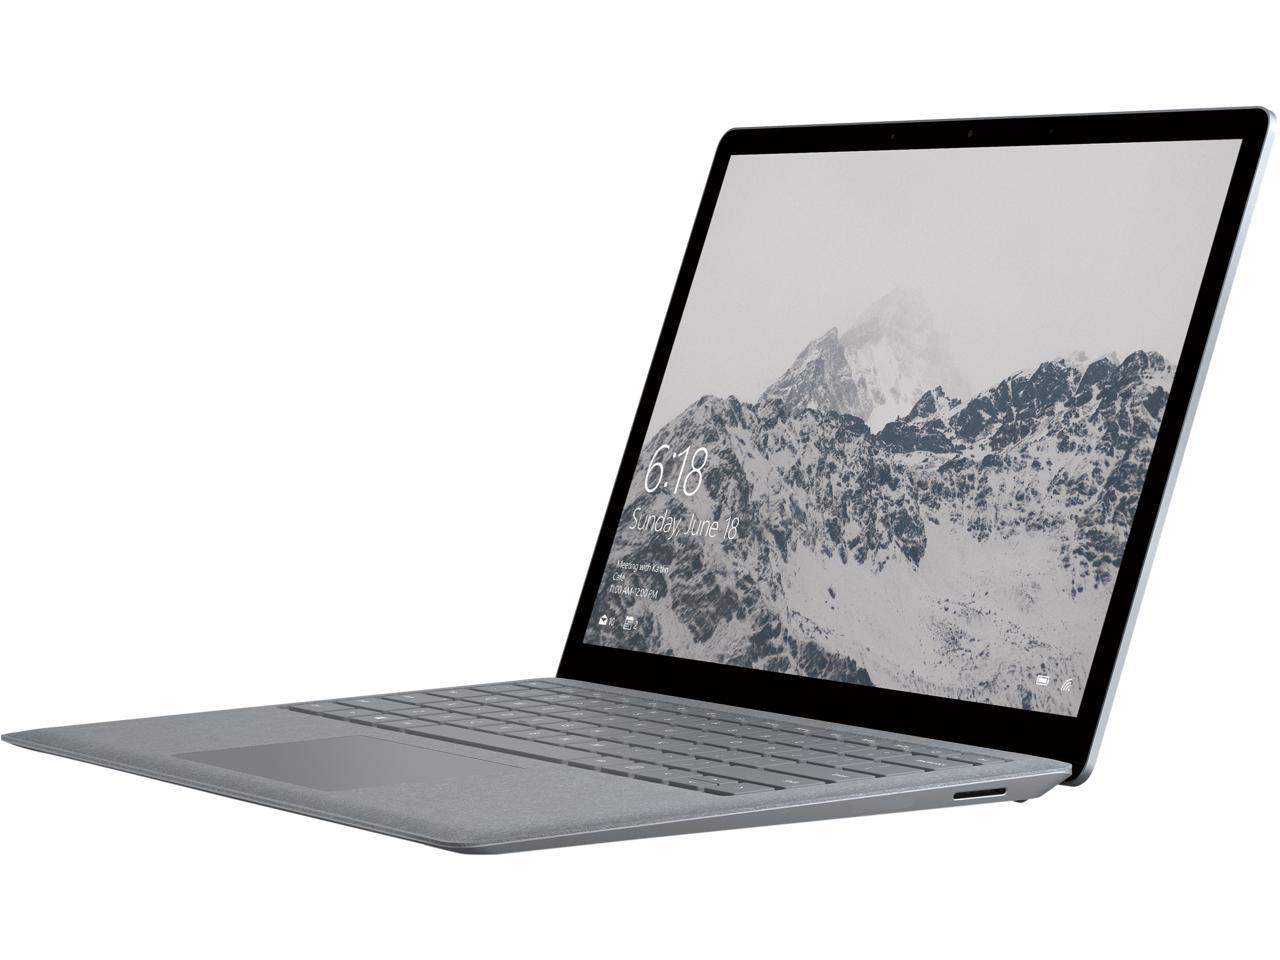 Microsoft Laptop Surface Laptop Intel Core i5 7th Gen 7200U (2.50GHz